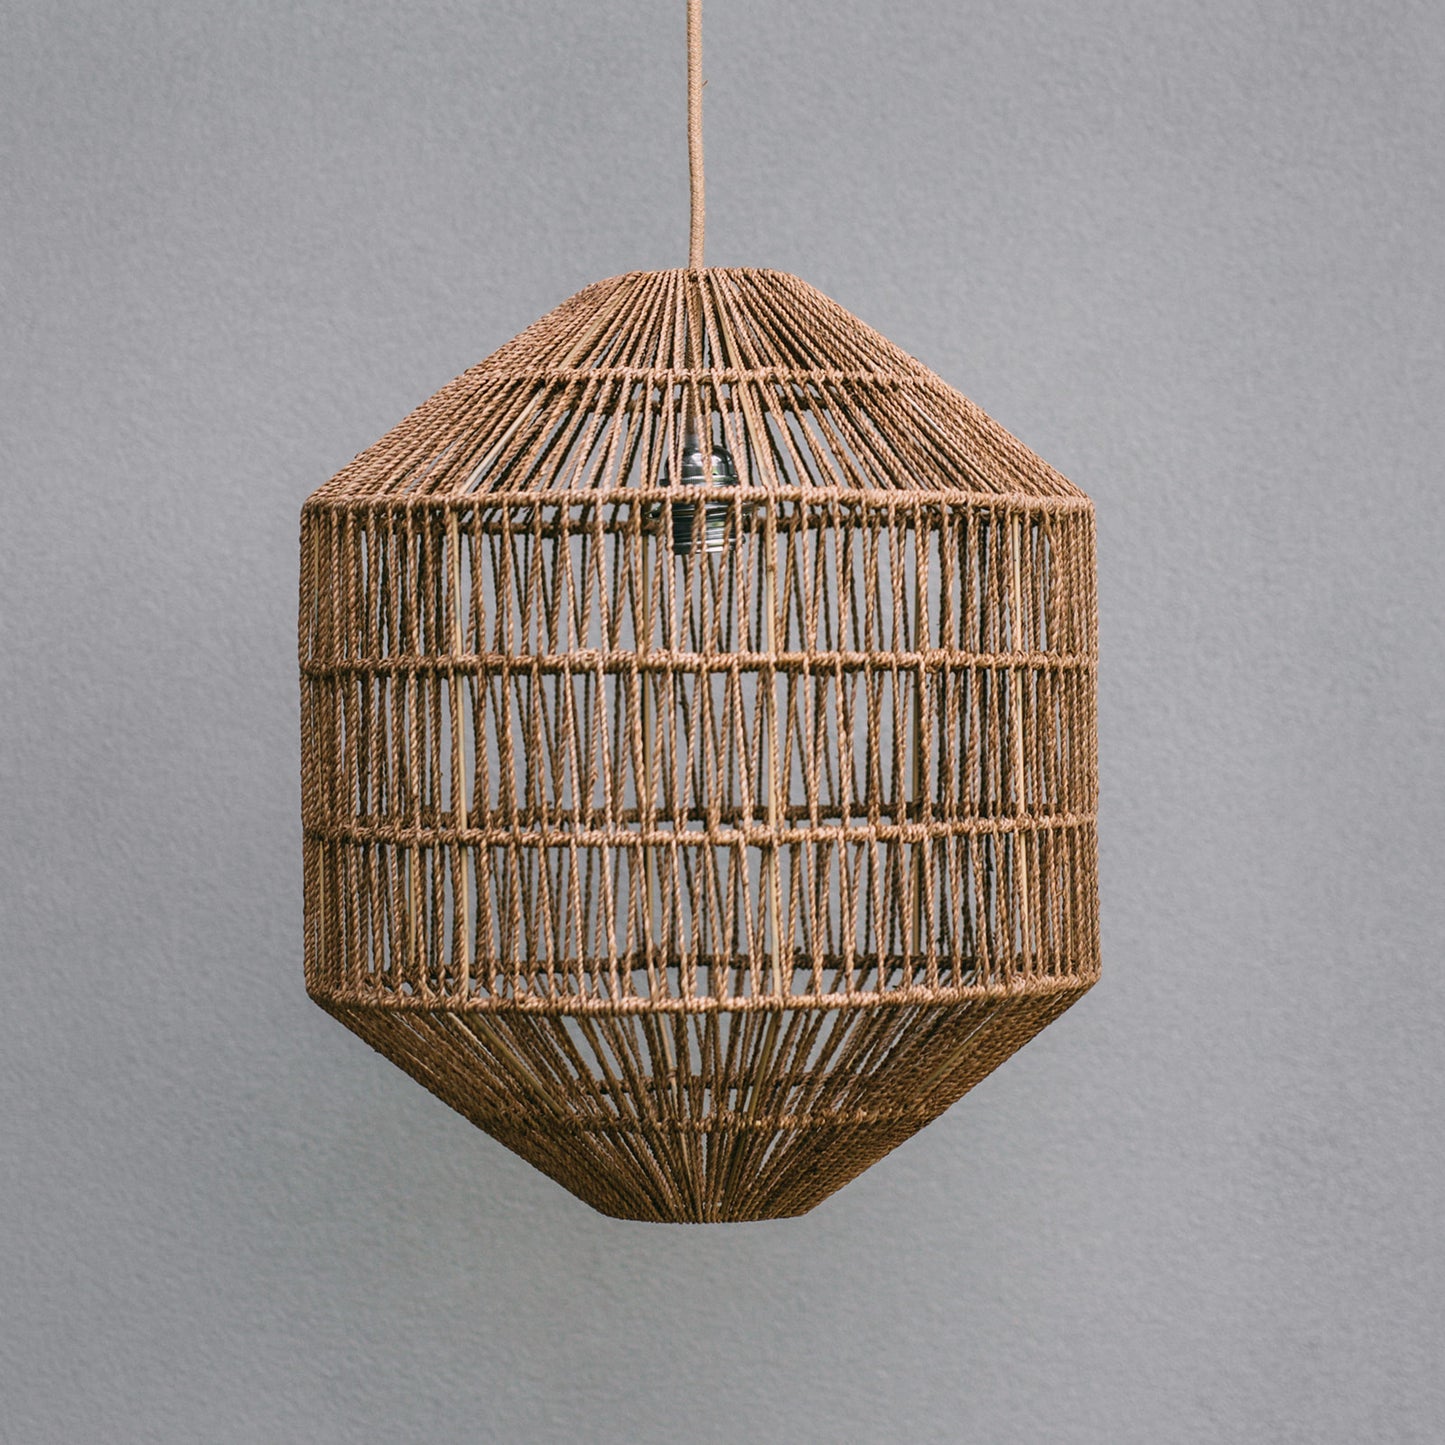 handmade seagrass pendant light.Seagrass pendant light shade. Ambient light for boho, beachy & modern interiors. 